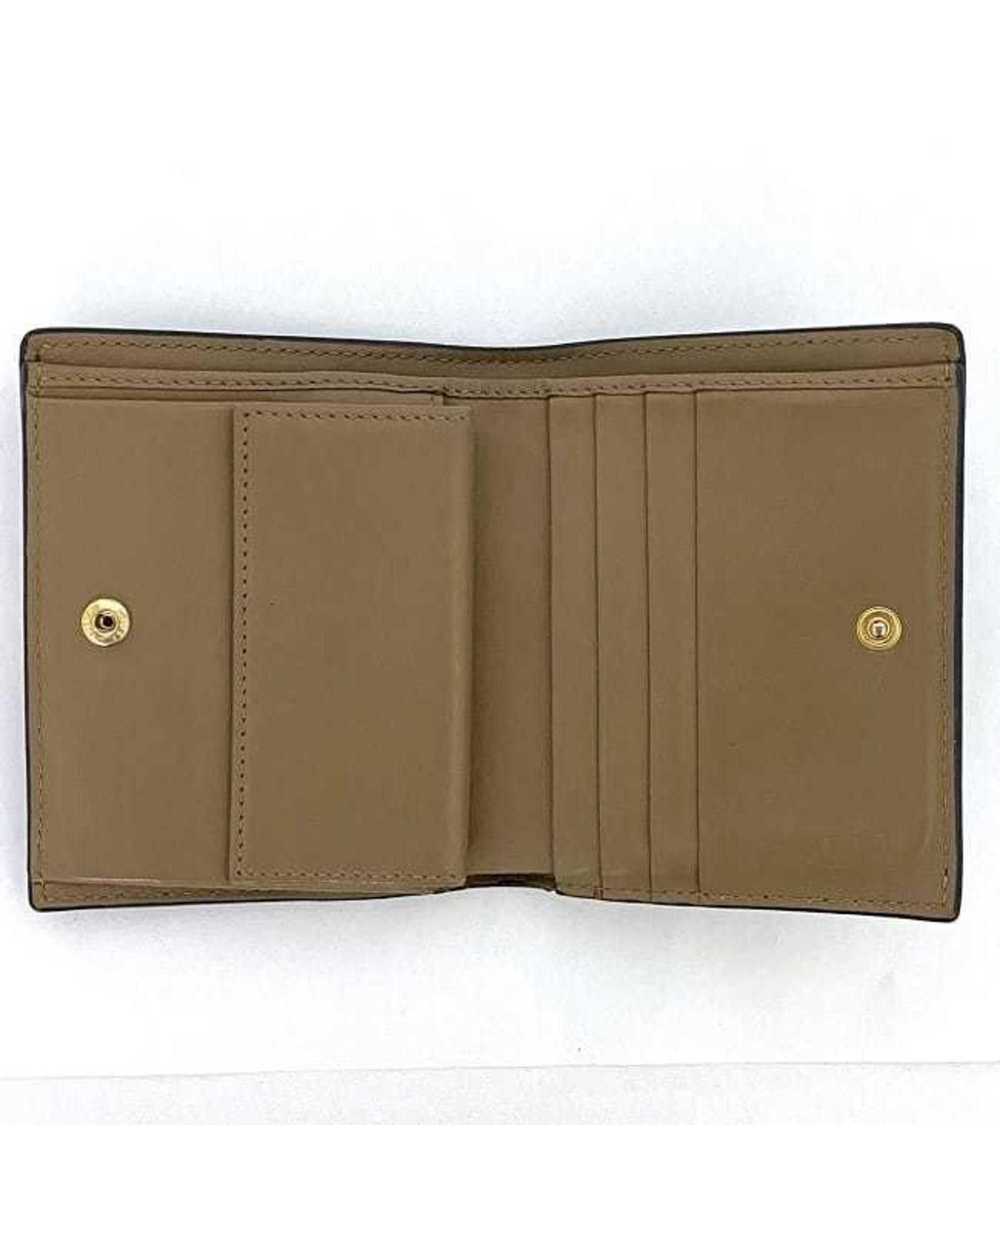 Fendi Burgundy Leather Compact Wallet - image 8